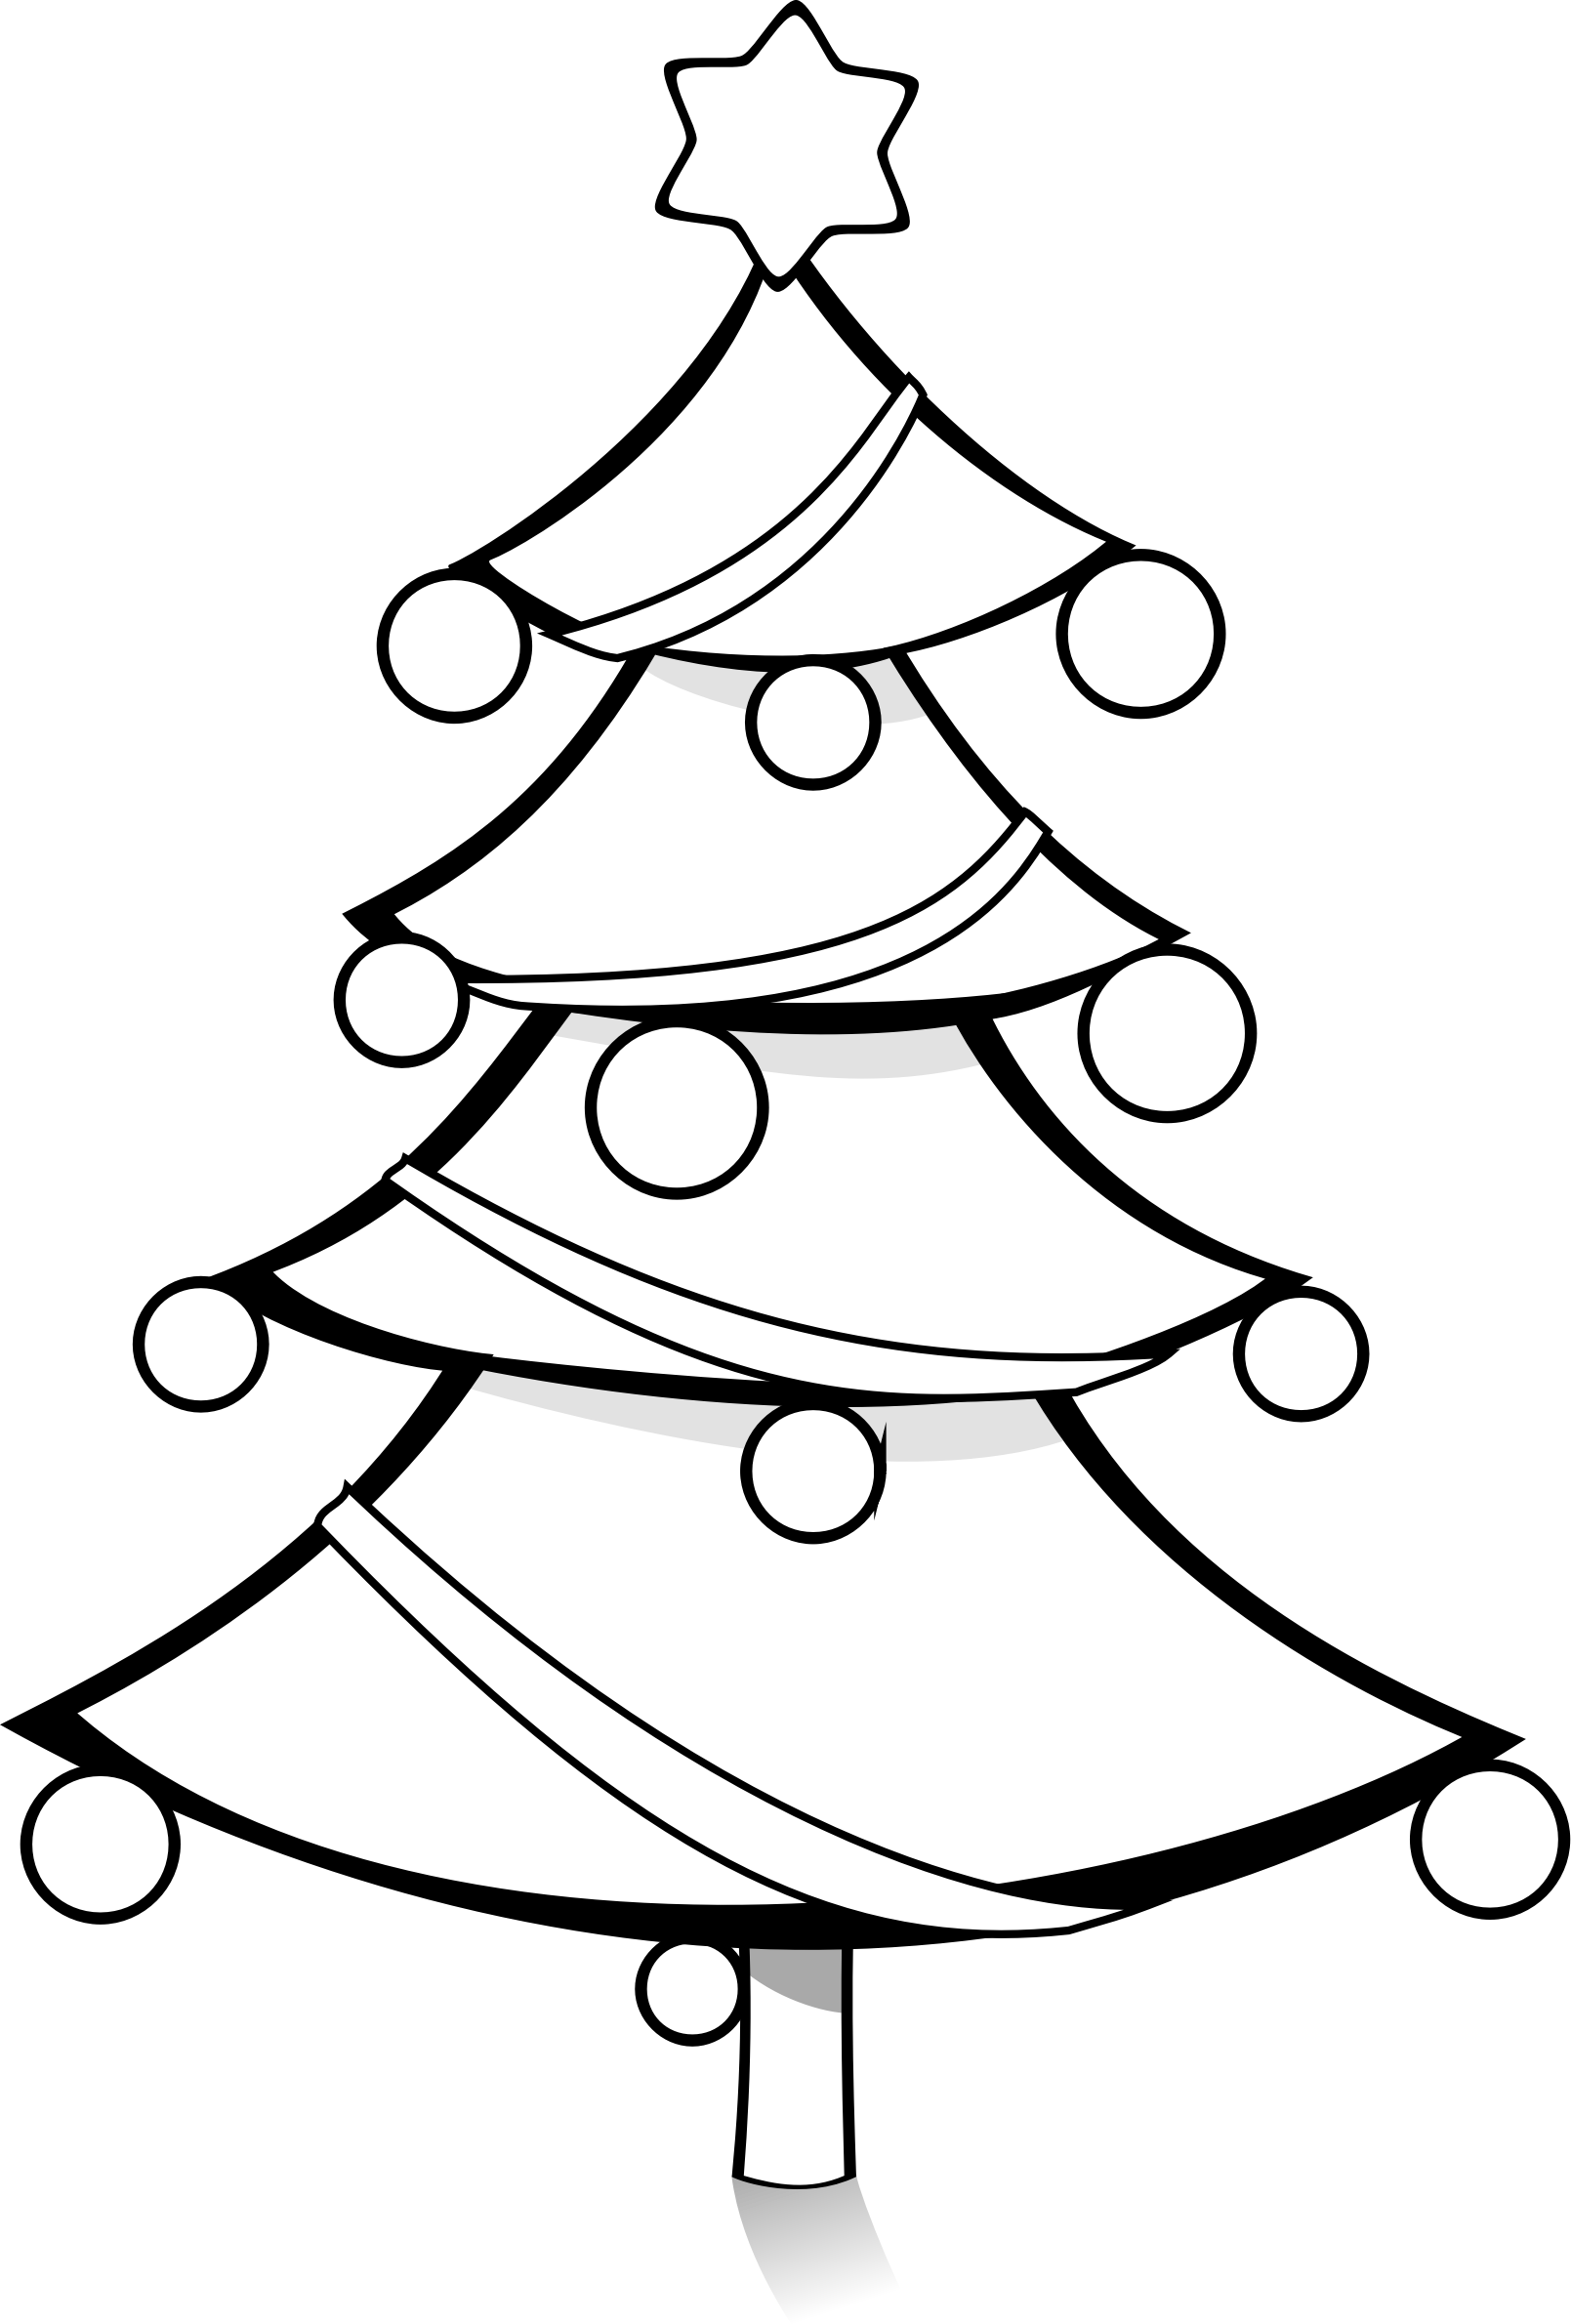 Christmas tree  black and white black and white xmas tree clipart 2